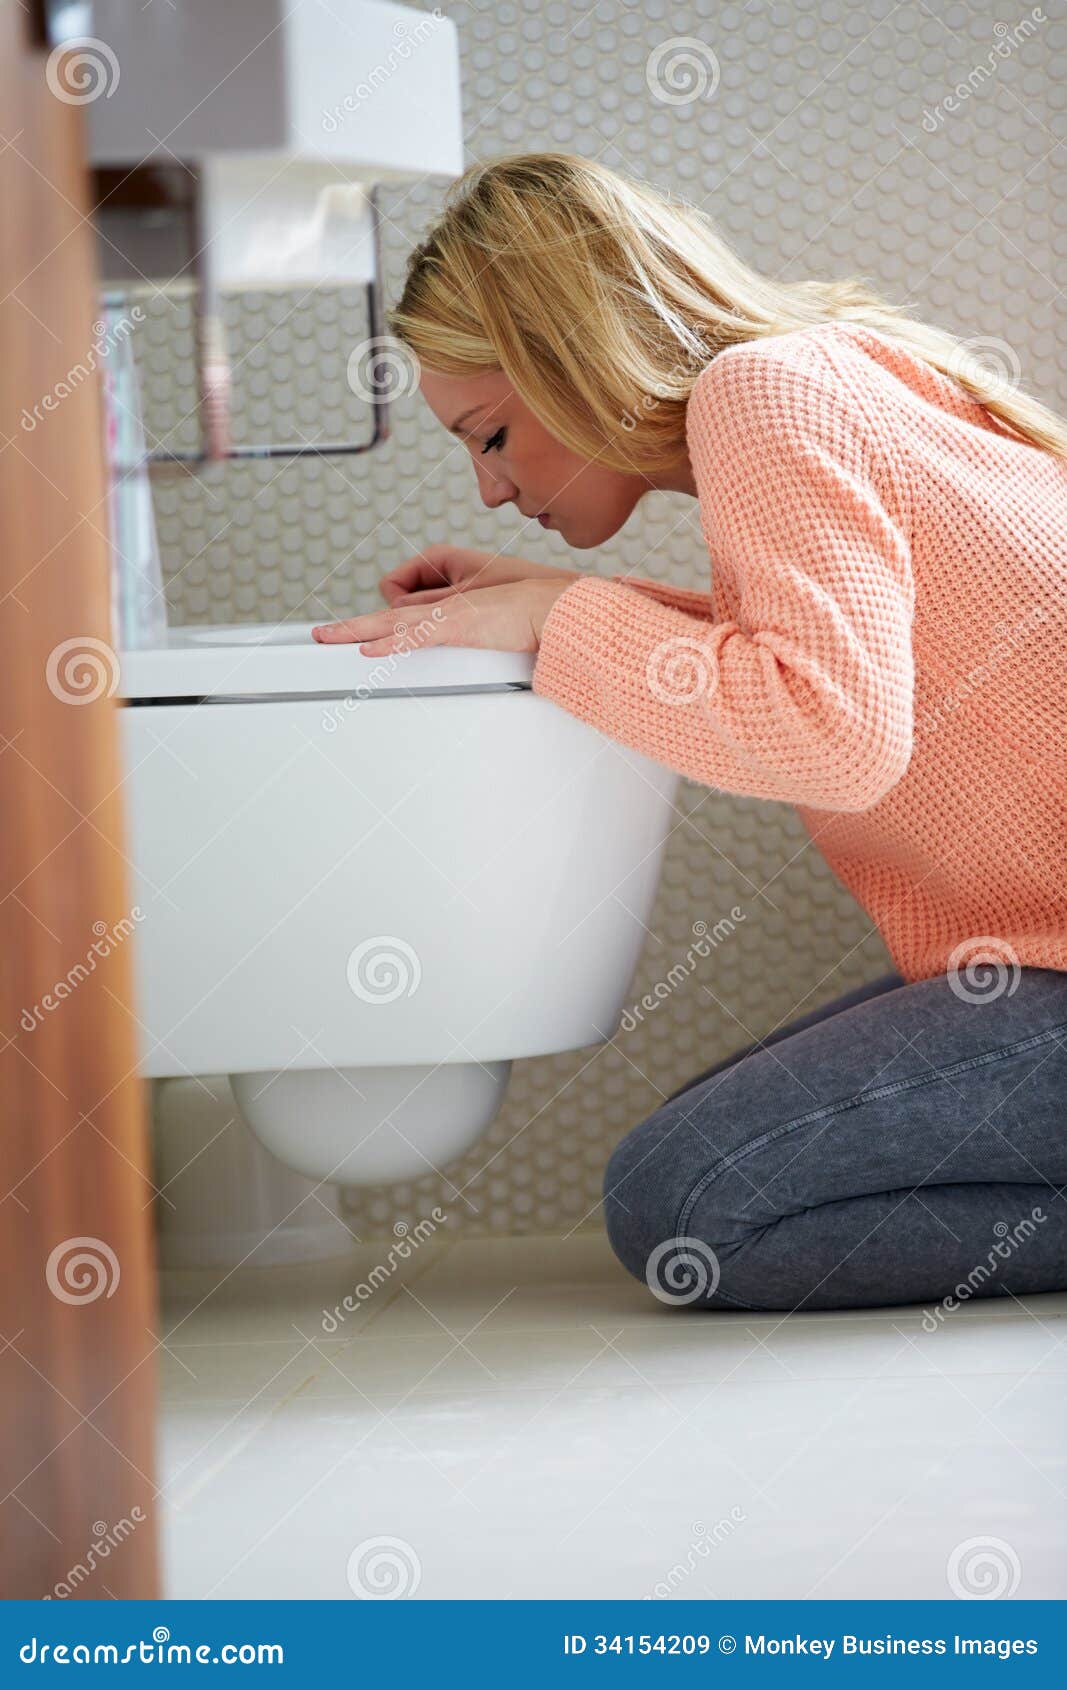 teenage girl feeling unwell in bathroom